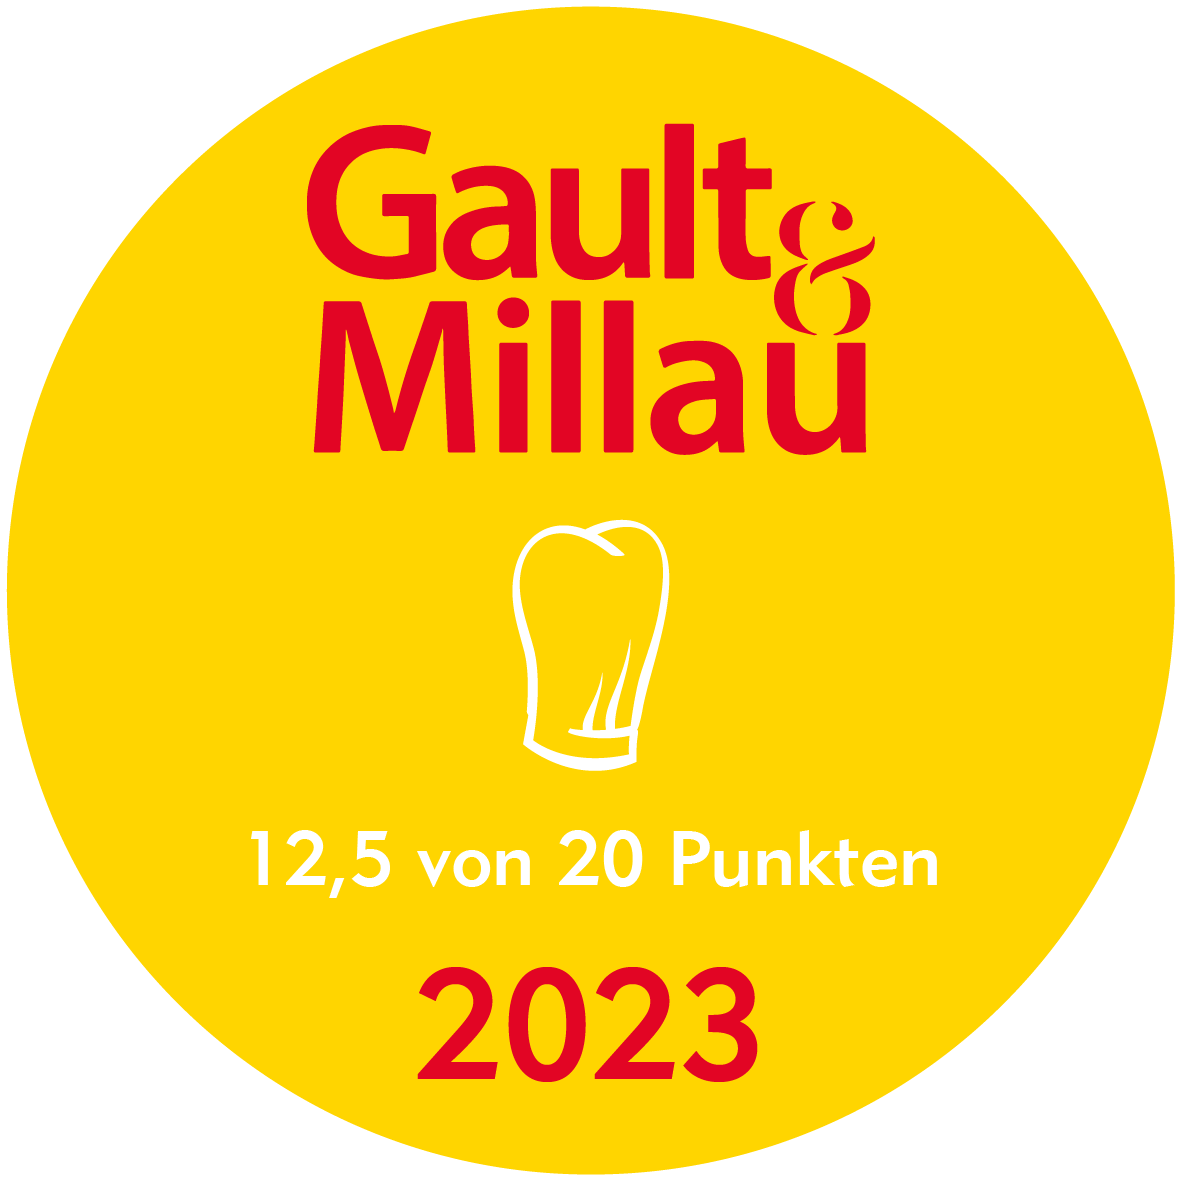 Guide Gault Millau 2023